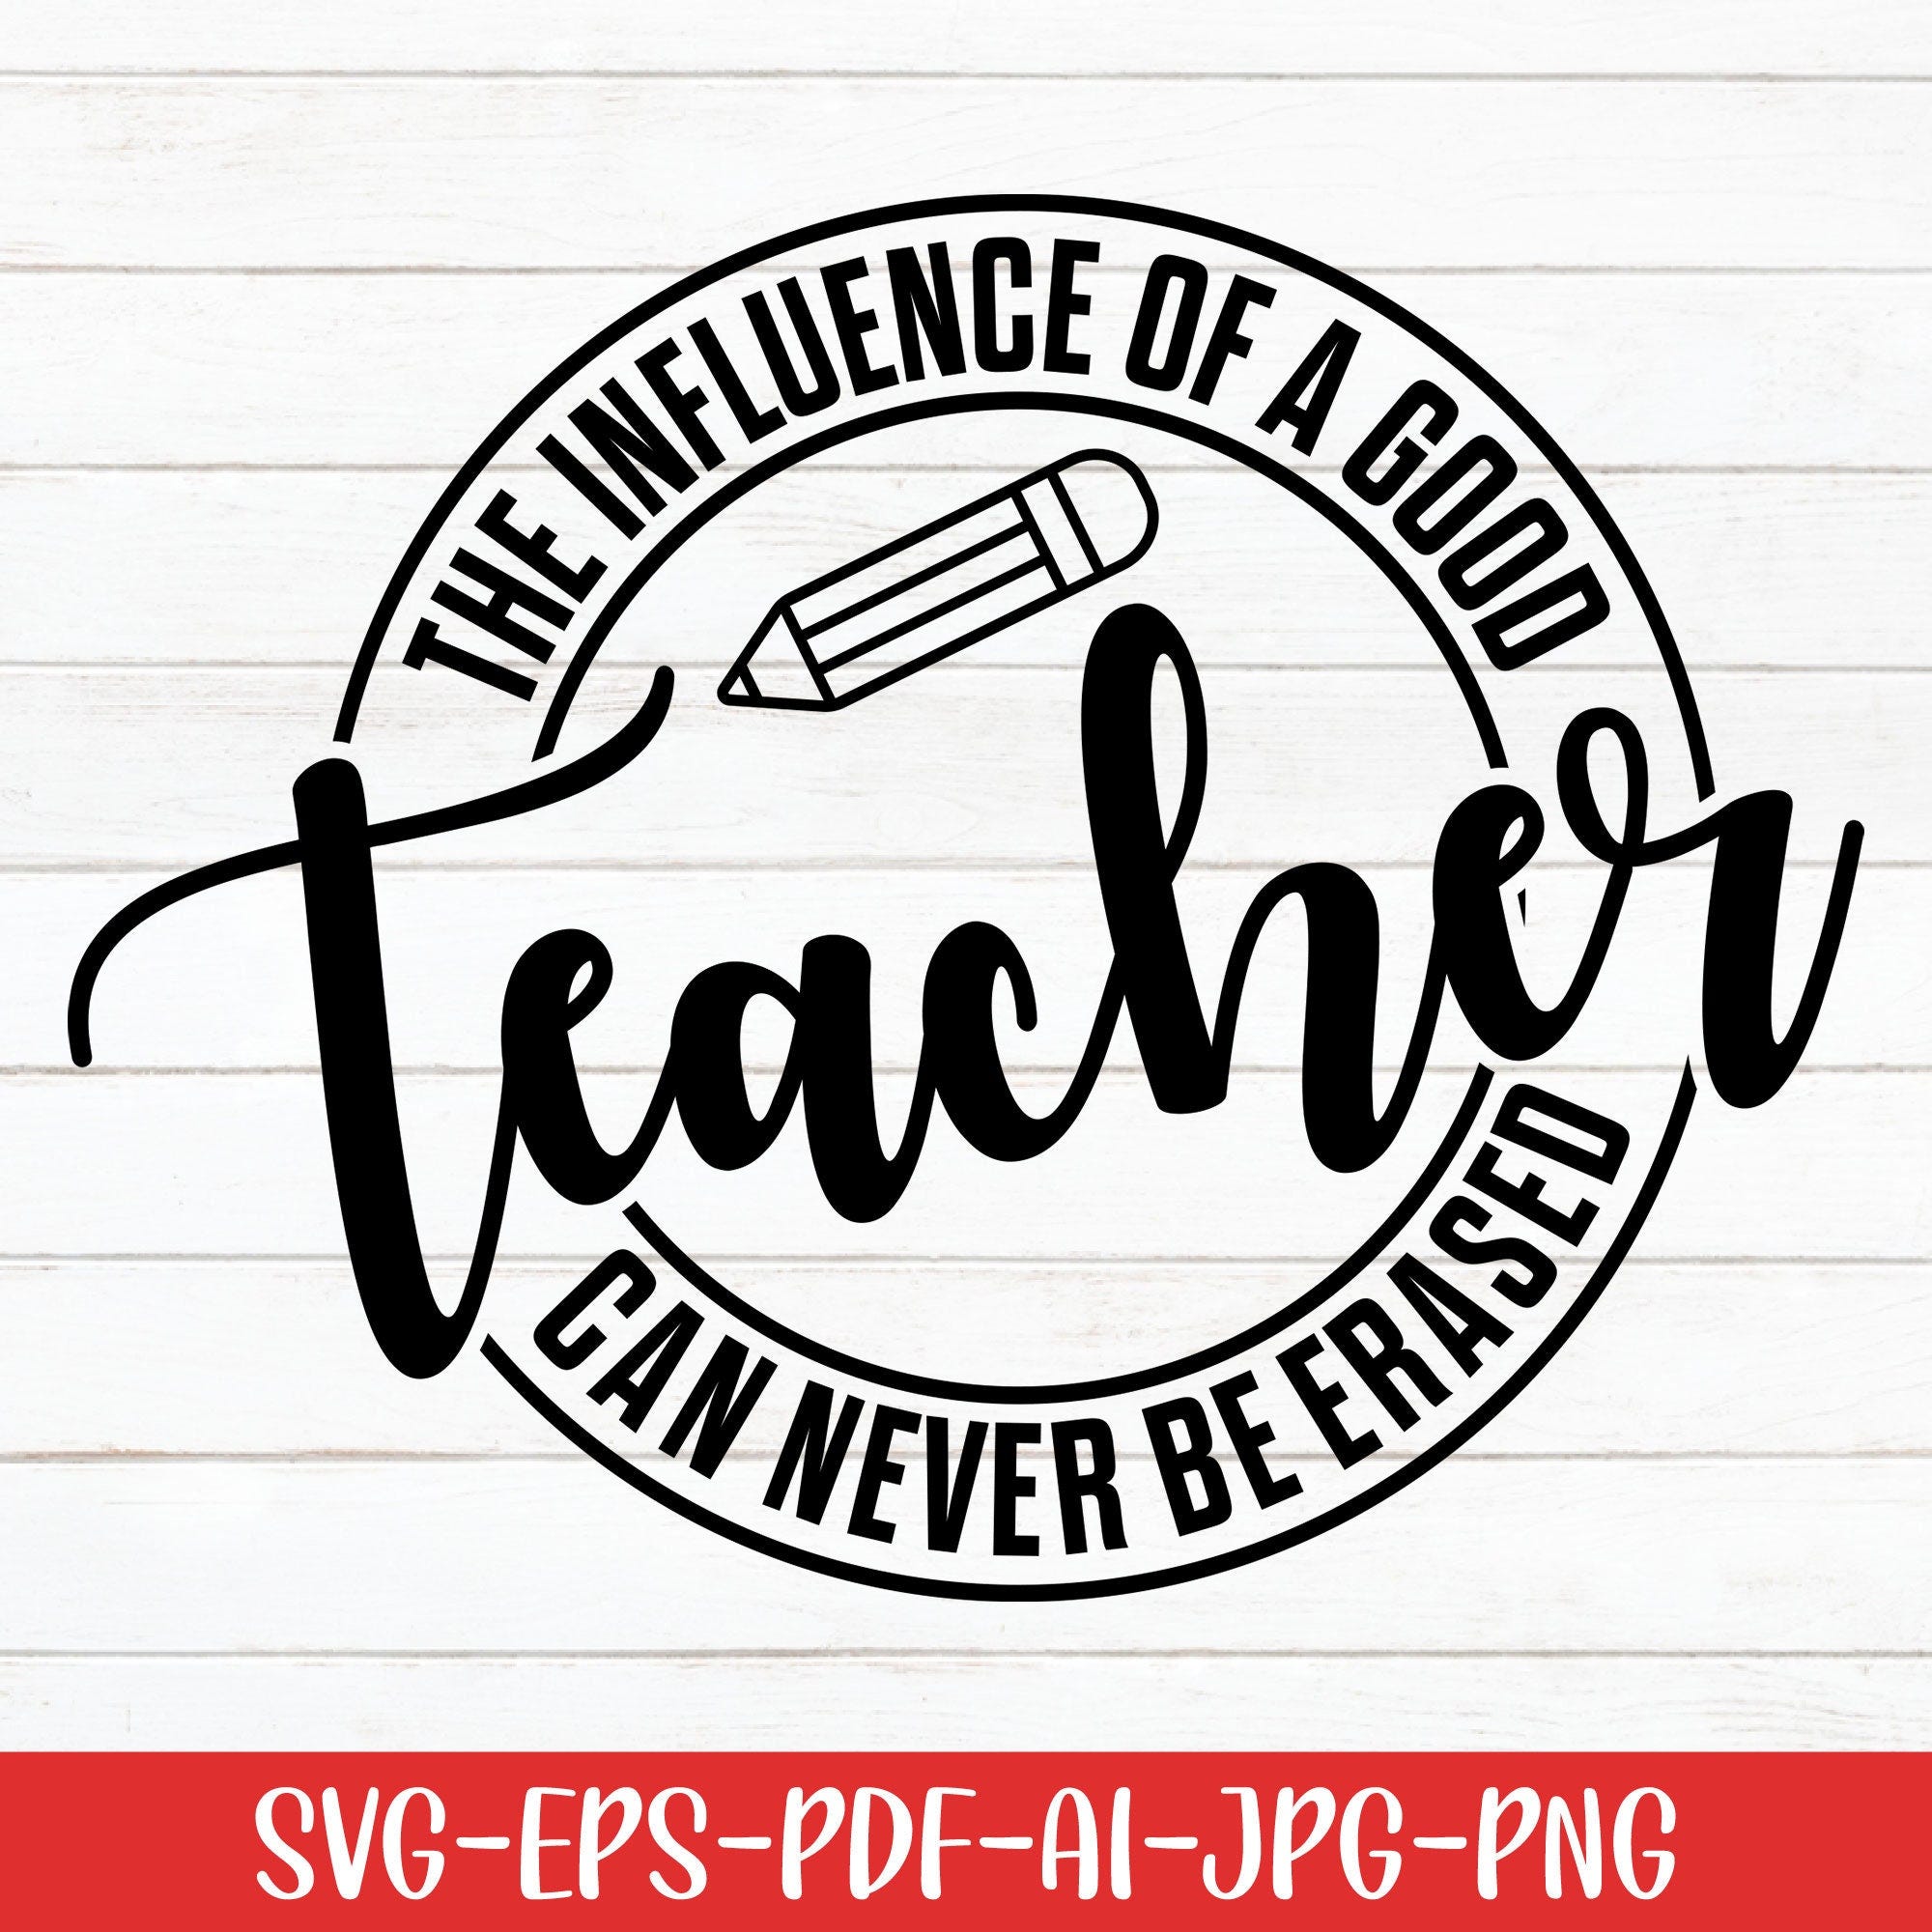 The Influence of a Good Teacher Can Never Be Erased Svg, Teacher Quote Svg, Teacher Svg, Digital Download, Teacher Life Svg, Svg Cut File